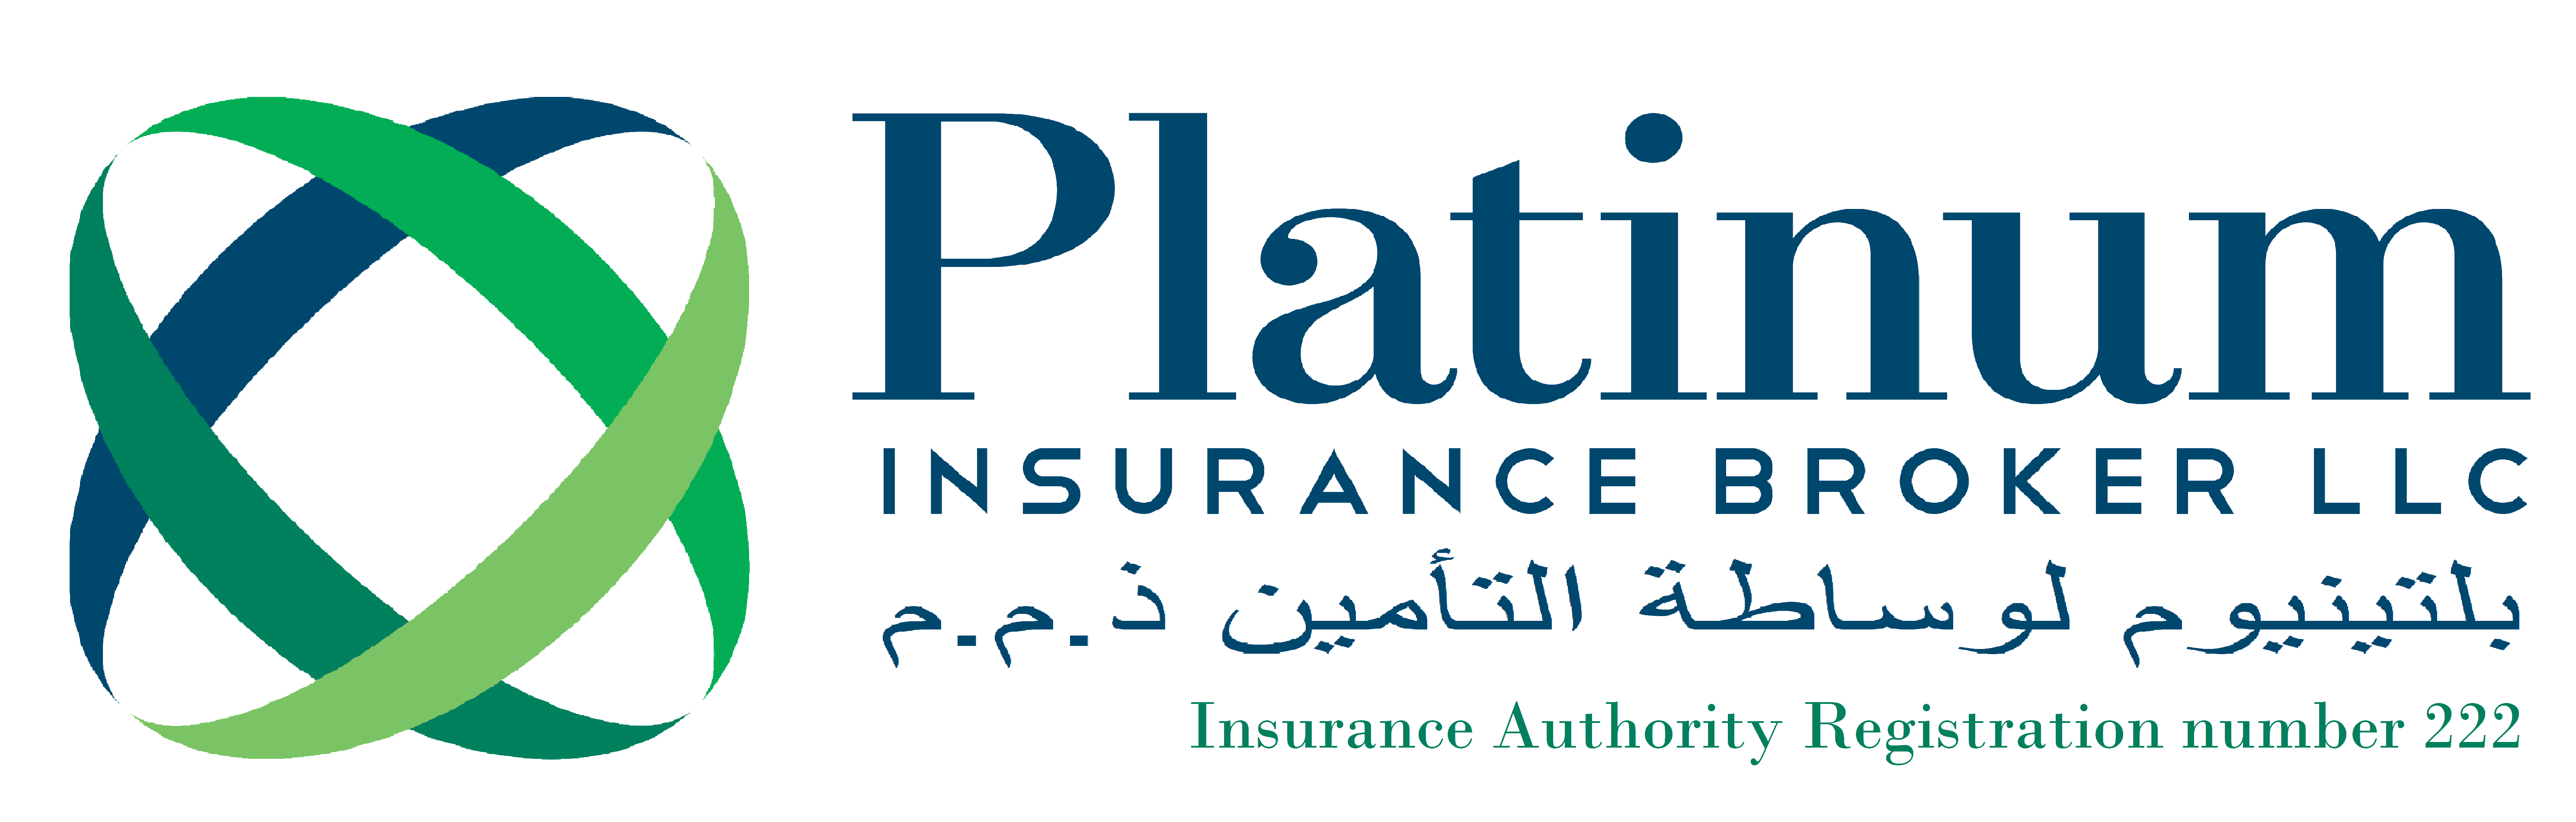 Platinum Insurance Broker L.L.C Logo